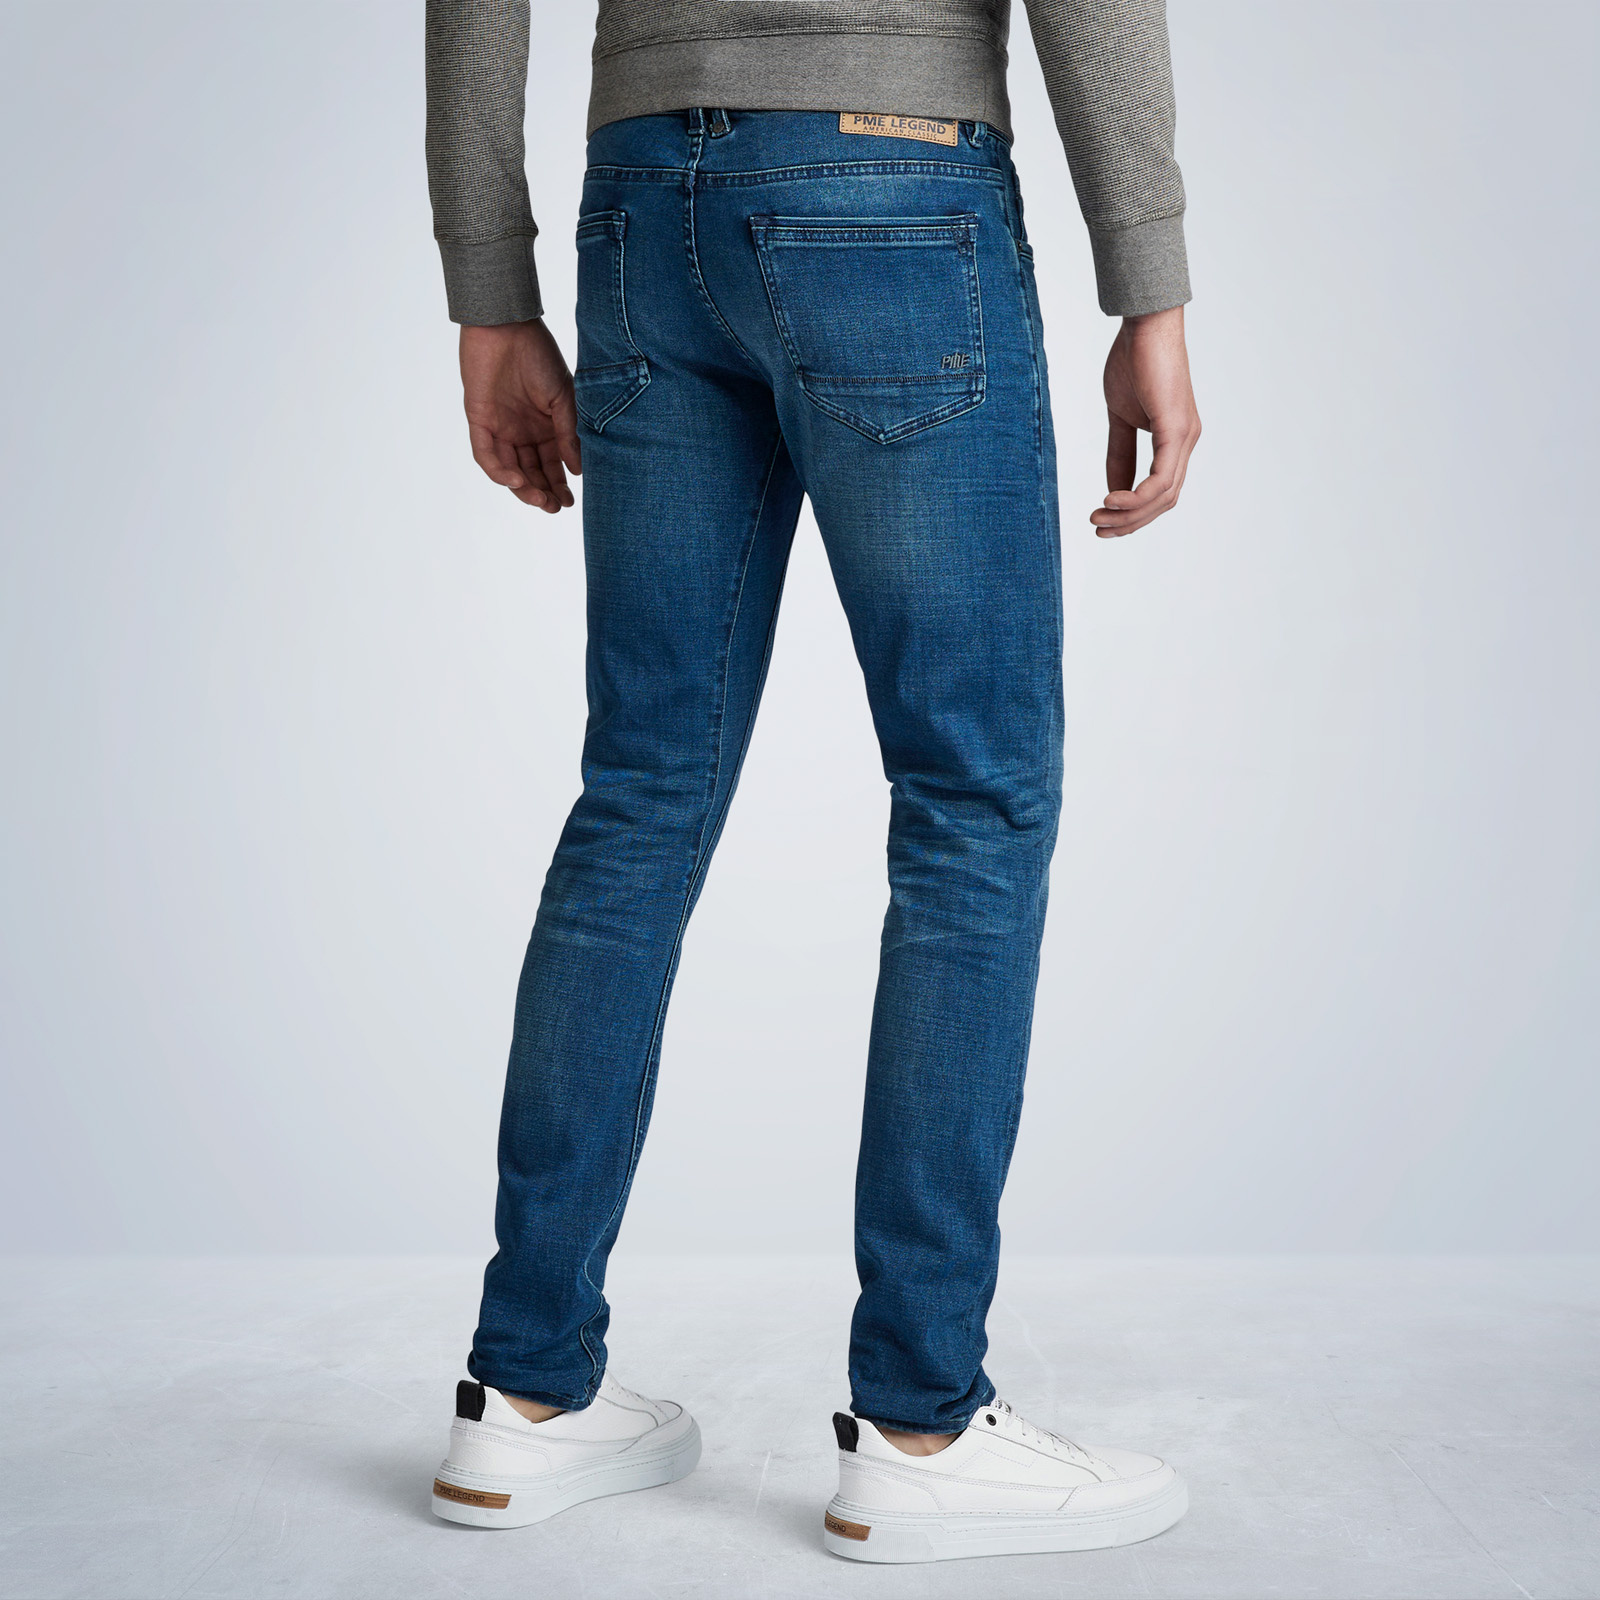 PME JEANS | Tailwheel Dark Blue Indigo Jeans | Free delivery